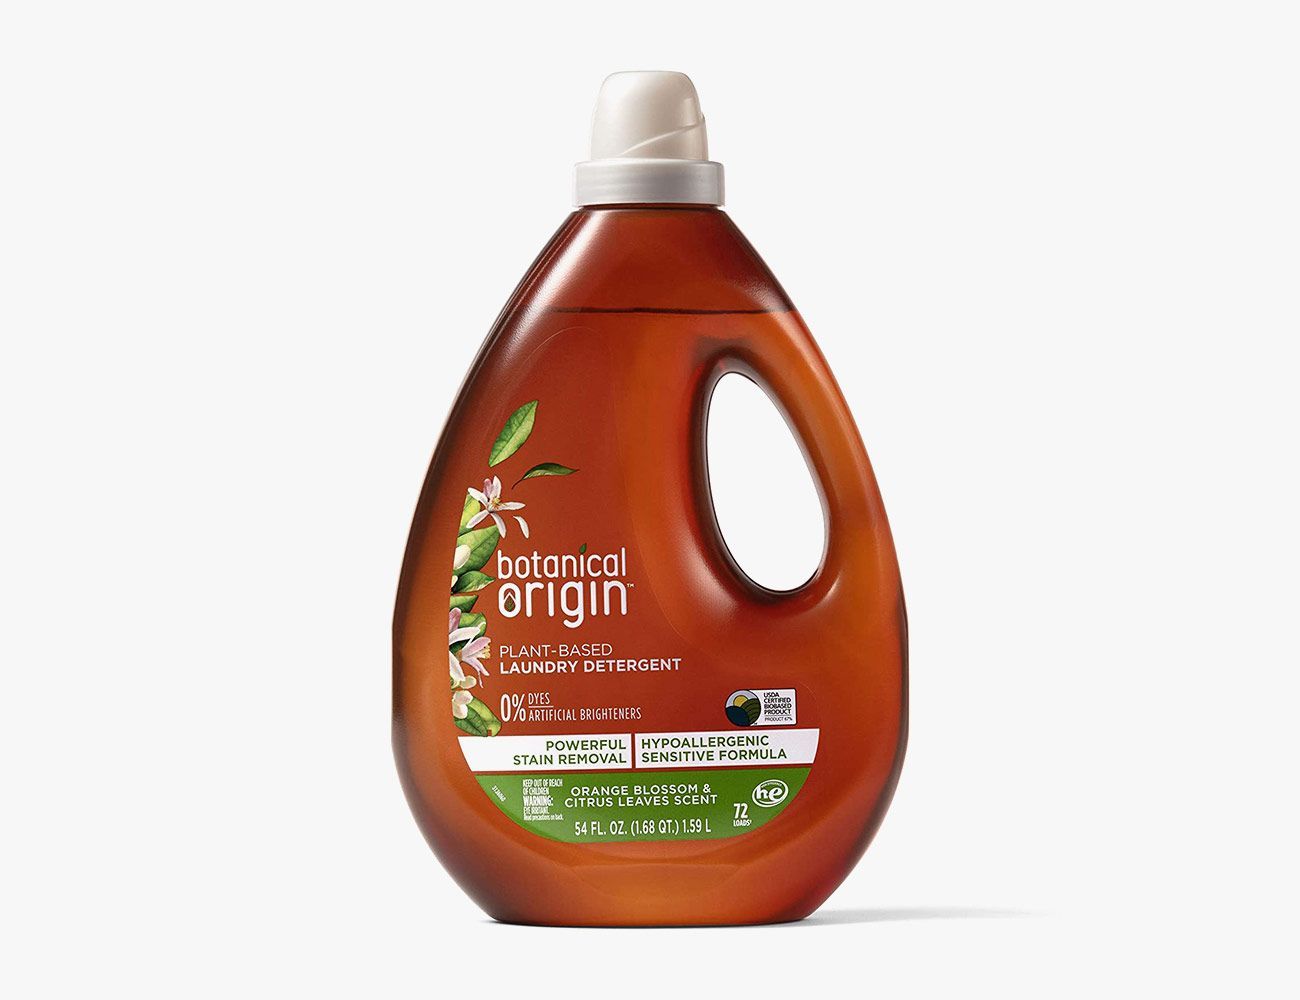 Plant origin. Botanic Original. Botanical Origin Green got tough natural based Laundry Detergent. Botanic additions.